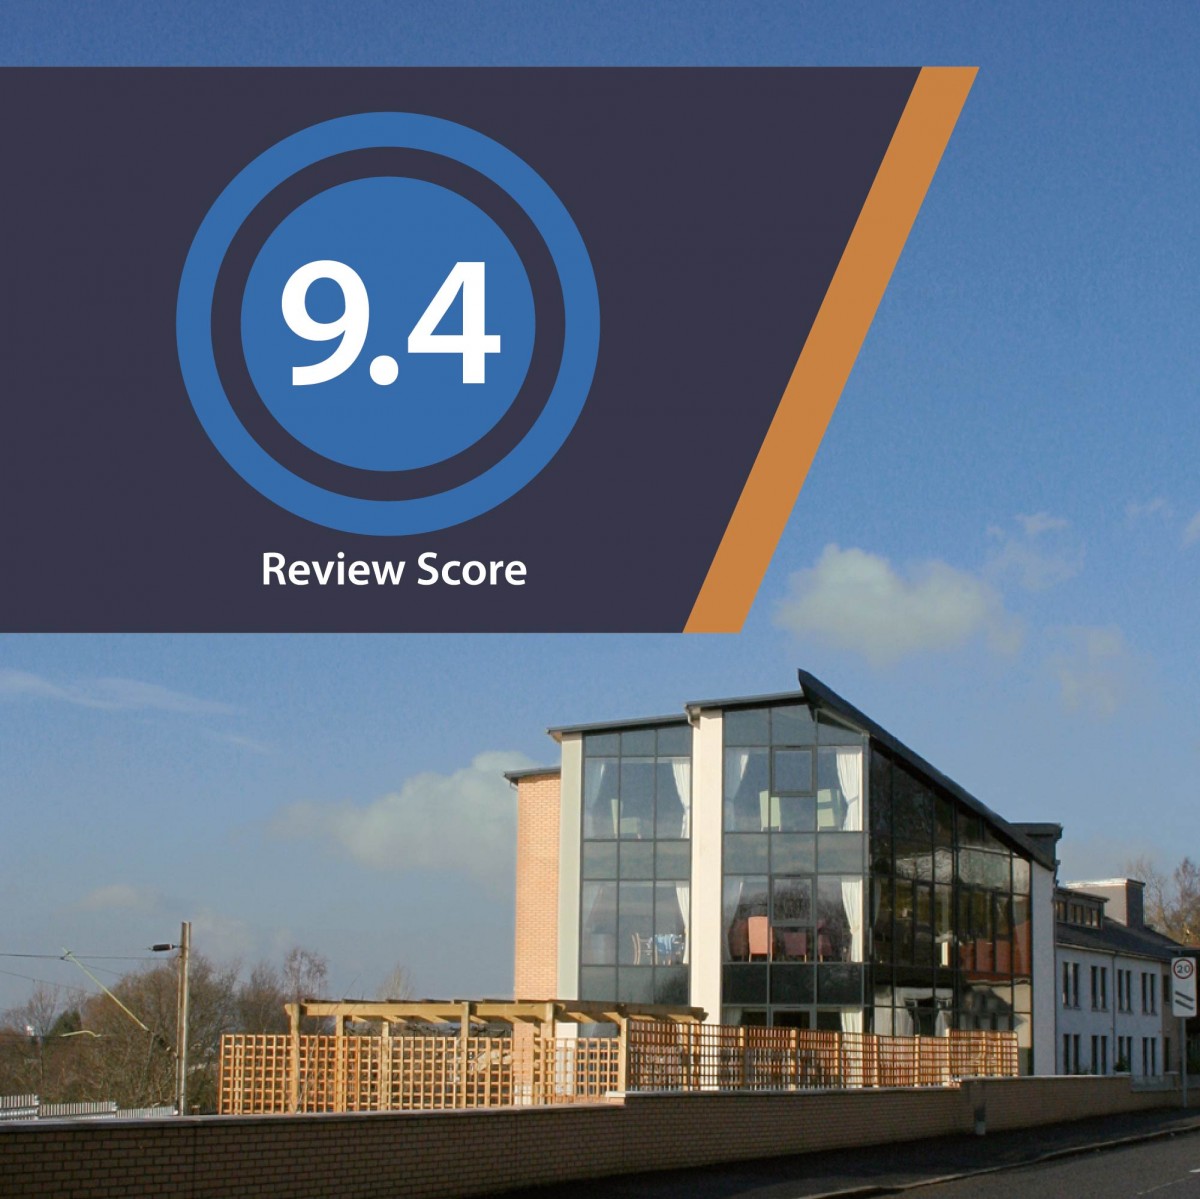 9.4 Review Score